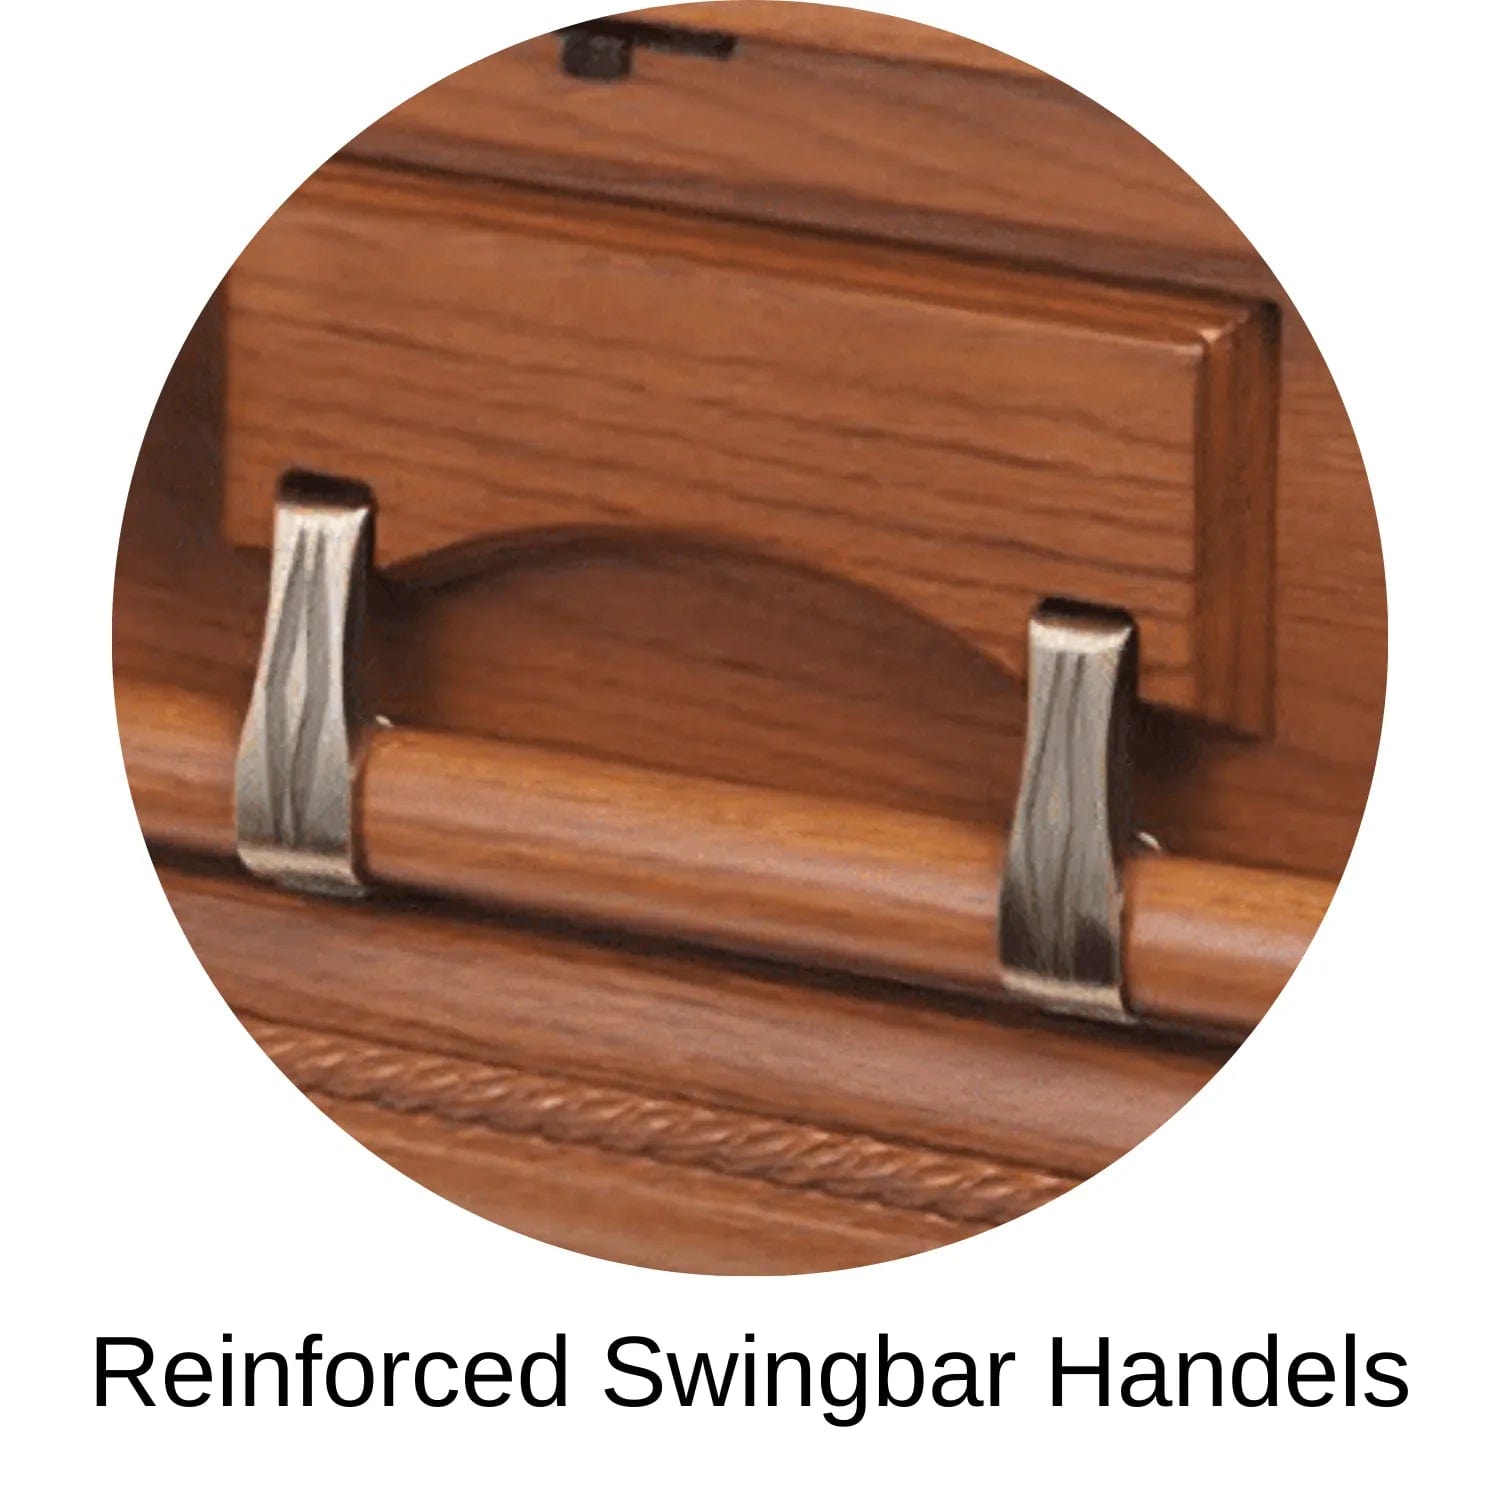 Load image into Gallery viewer, Reinforced Swingbar Handles Of Veneto (Oak) Series Wood Casket with Satin Finish
